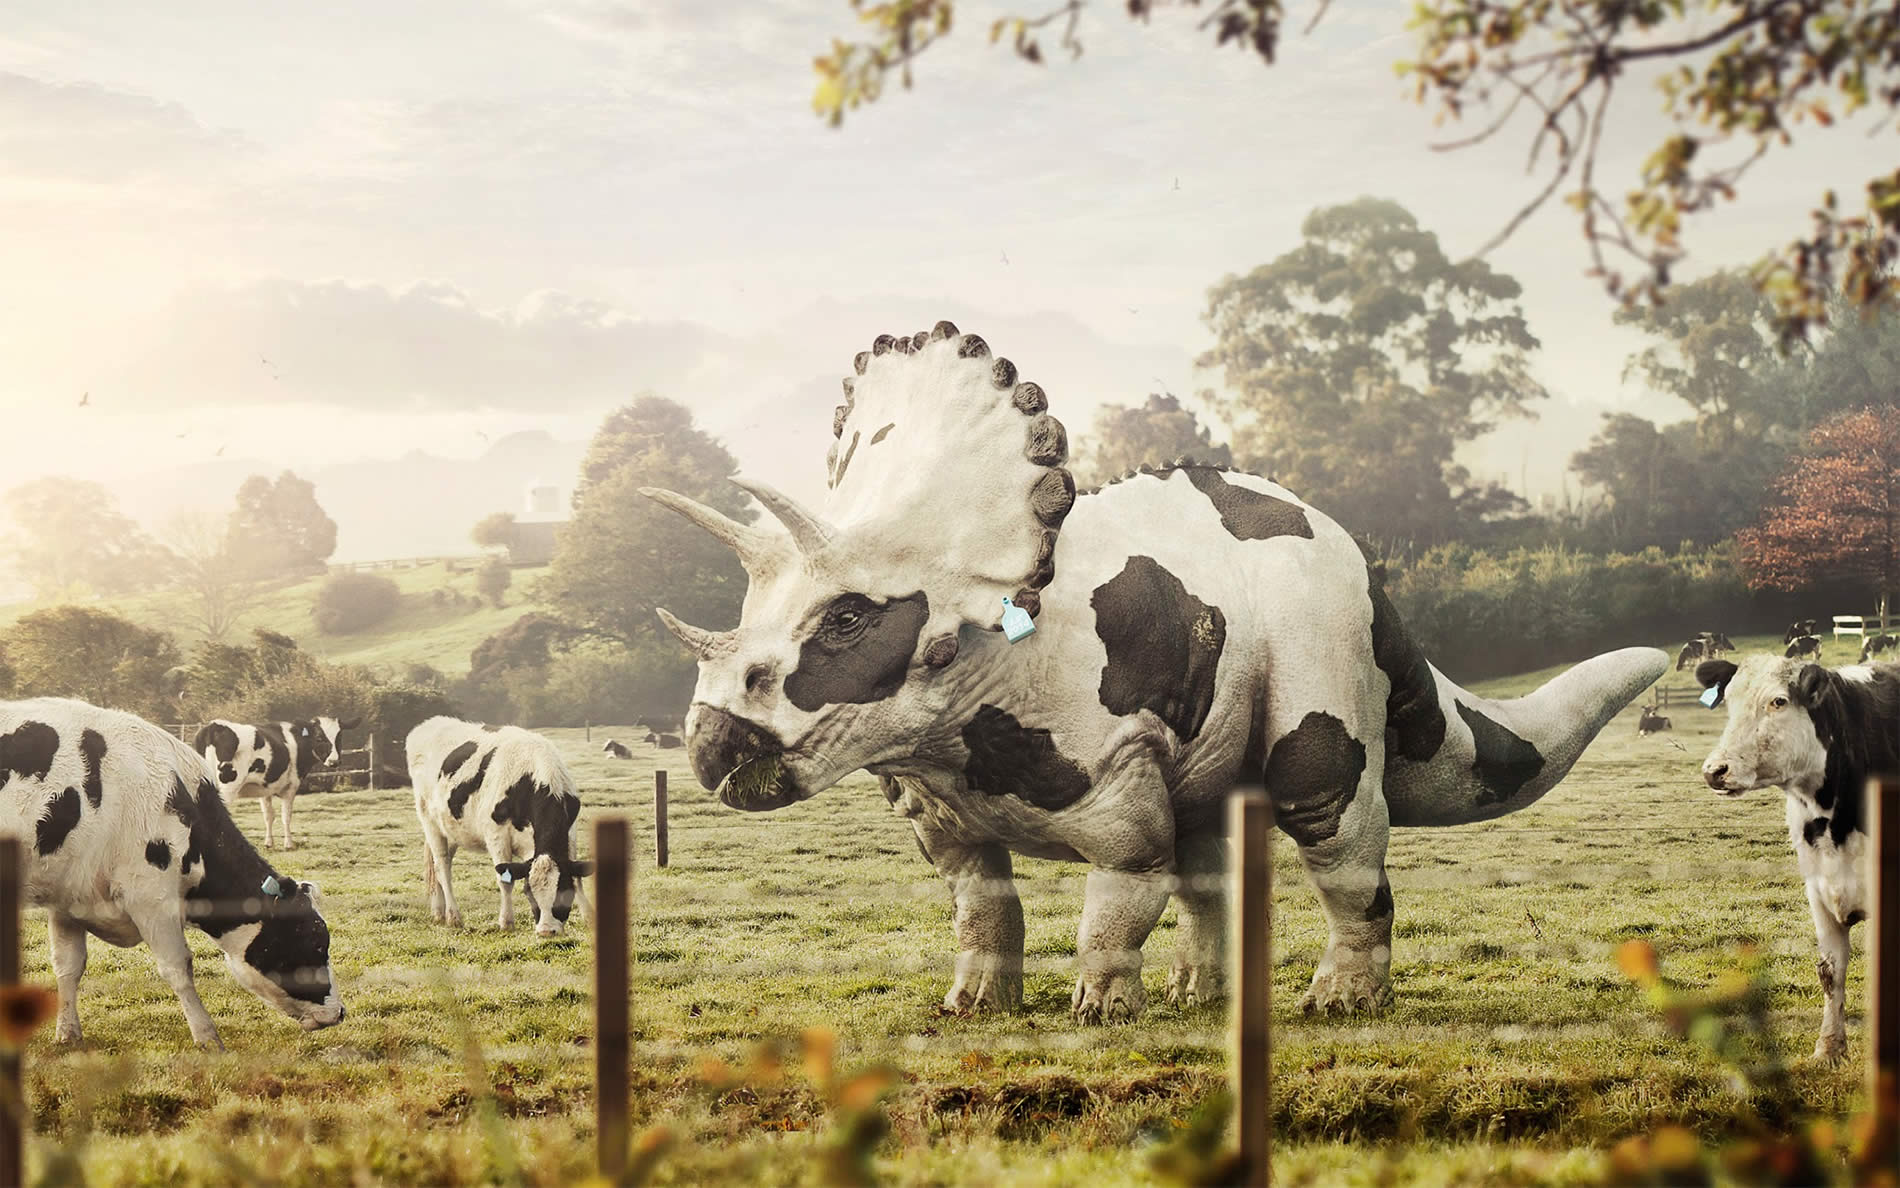 the cow triceratops by lightfarm studios